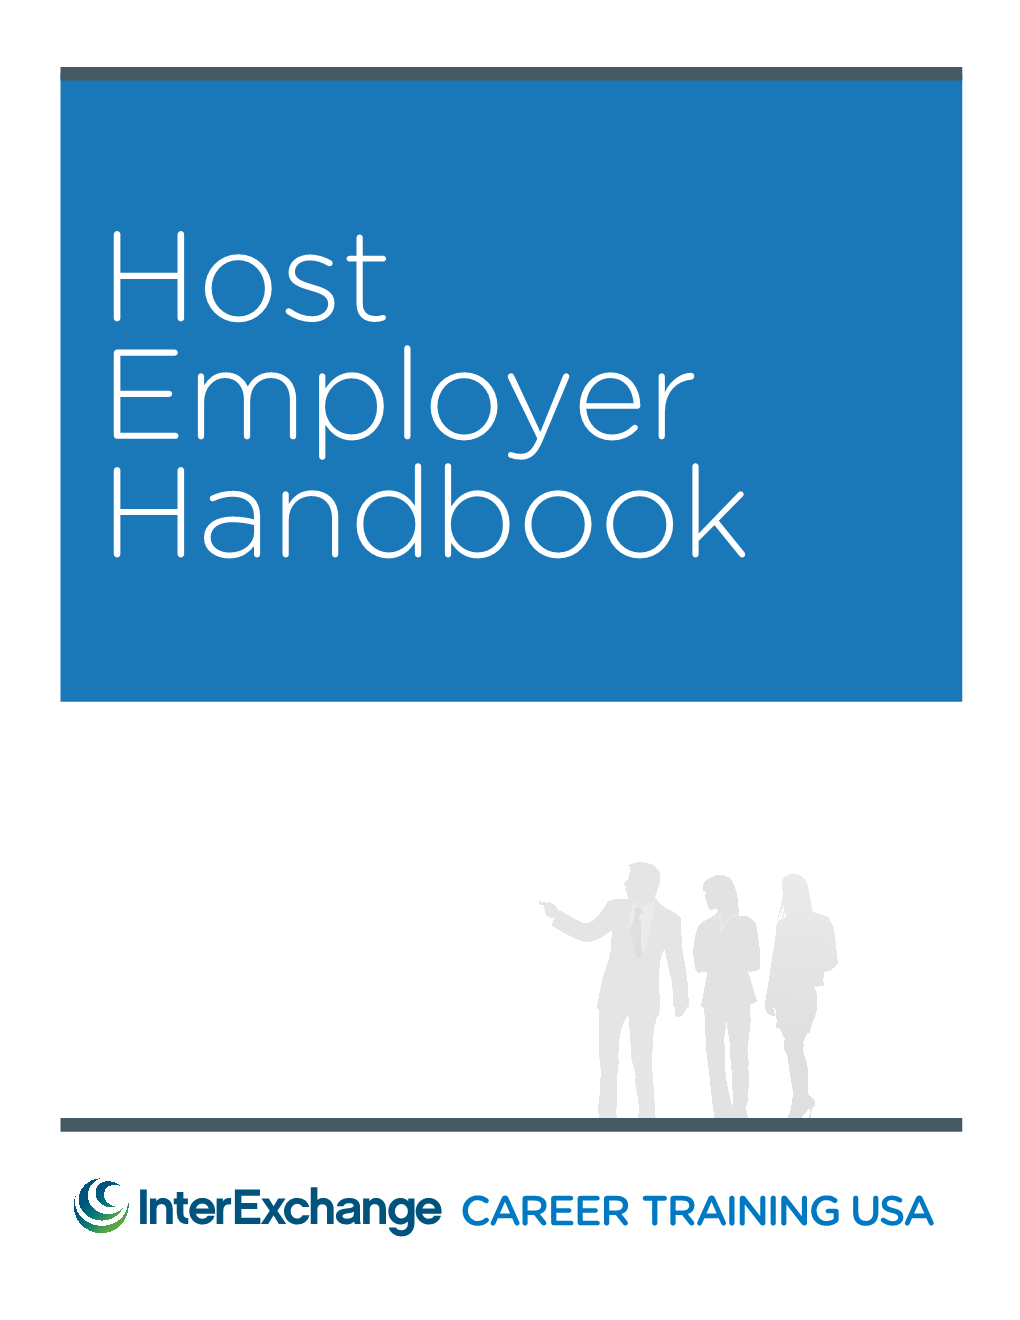 Interexchange Career Training USA | Host Employer Handbook